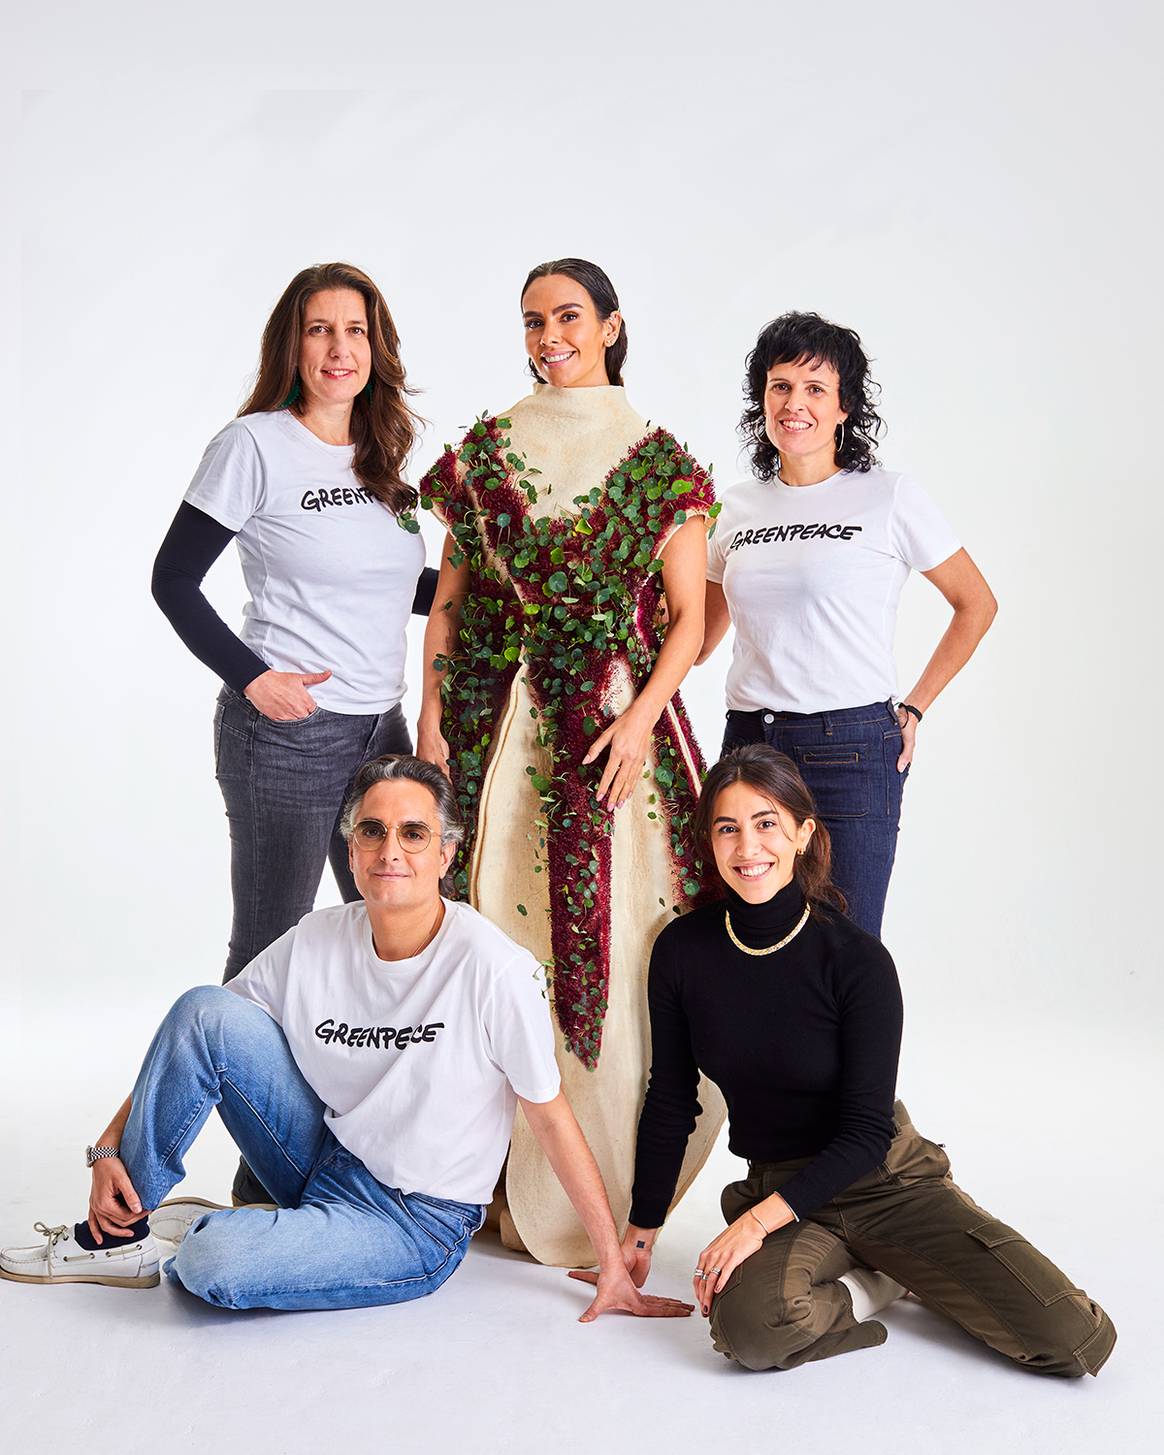 Fotografía de grupo, con Eva Saldaña, Directora Ejecutiva Greenpeace; Cristina Pedroche; Edurne Rubio, Responsable Comunicación Greenpeace; Josie y la diseñadora Paula Ulargui.